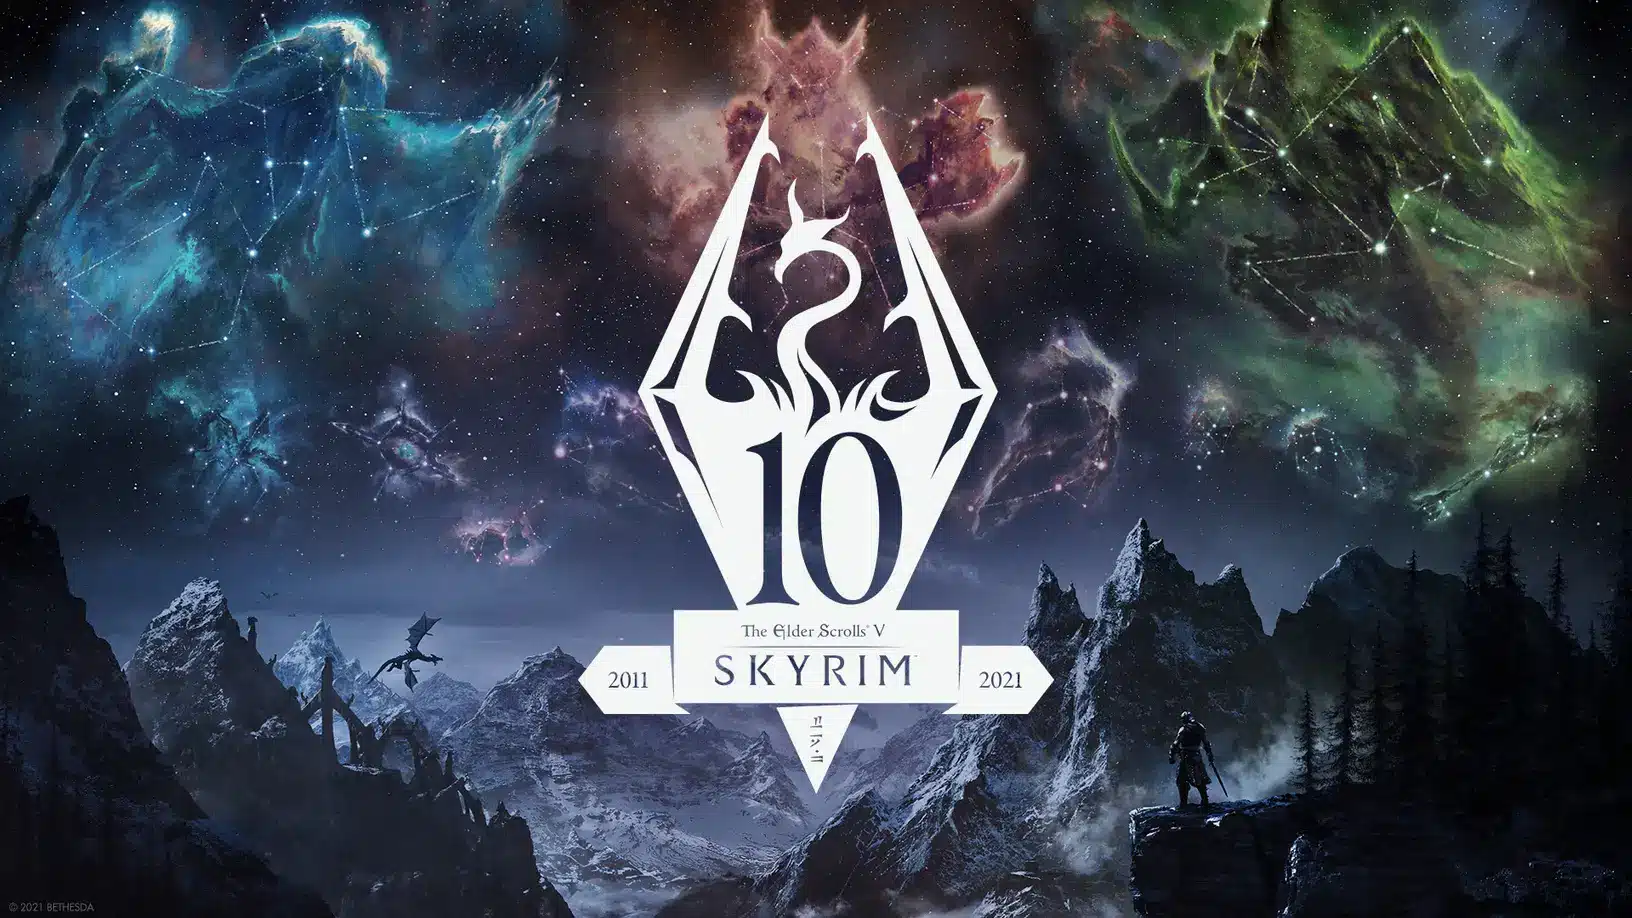 crolls V: Skyrim Anniversary Edition 1